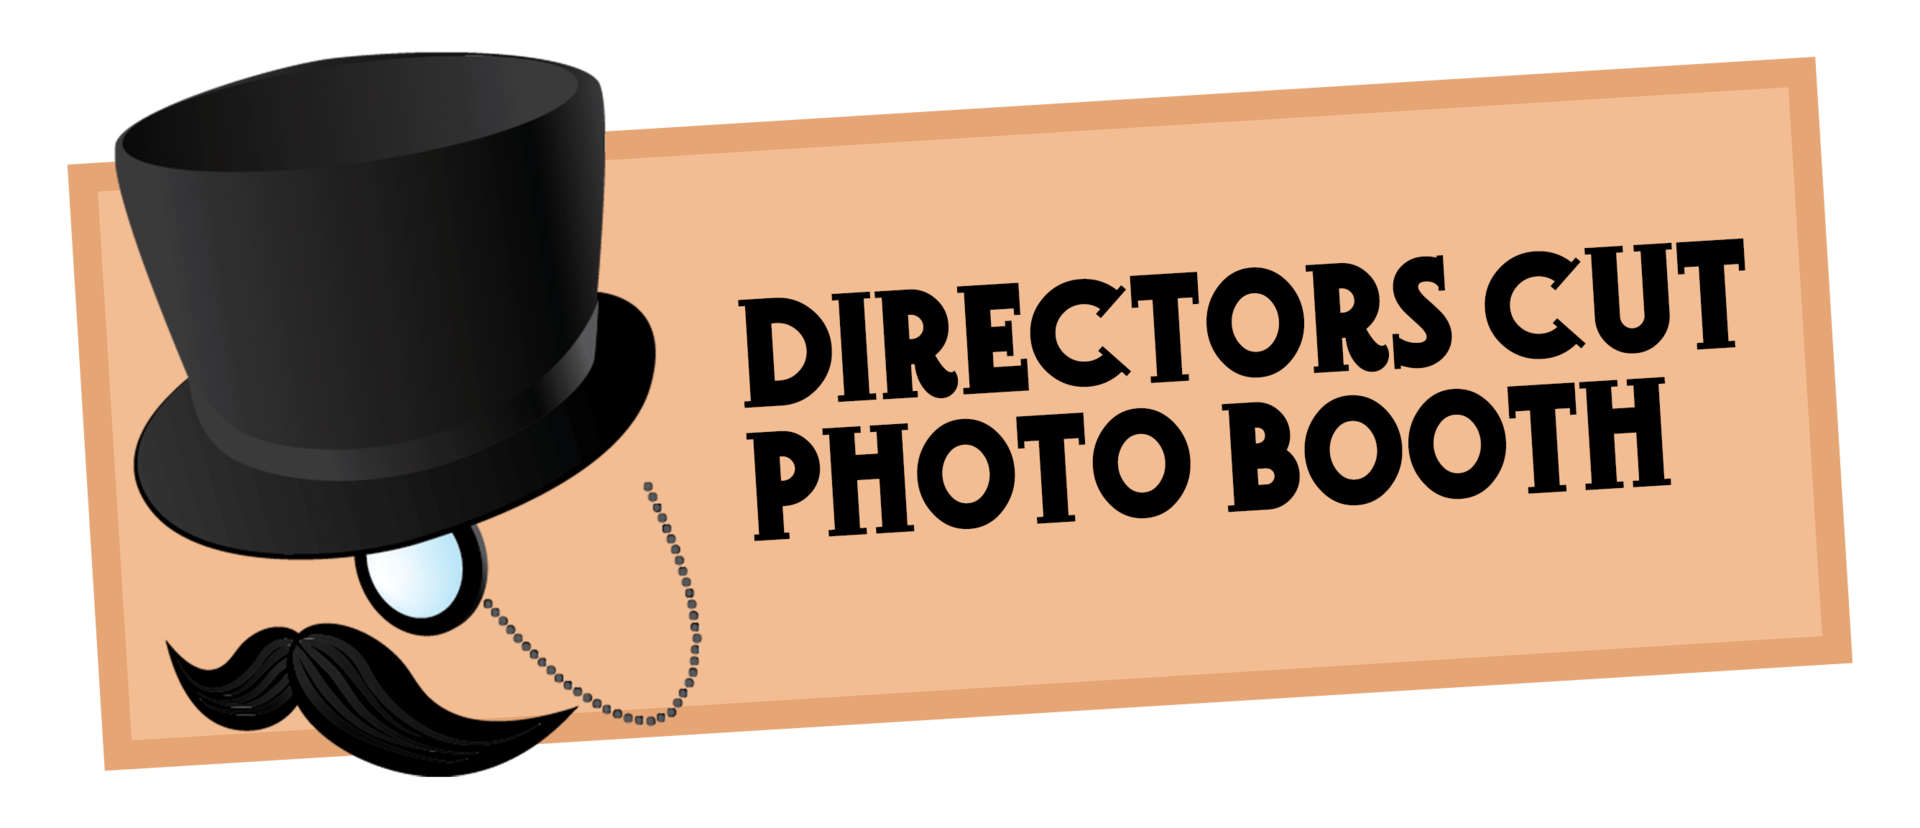 (c) Directorscutphotobooth.co.uk